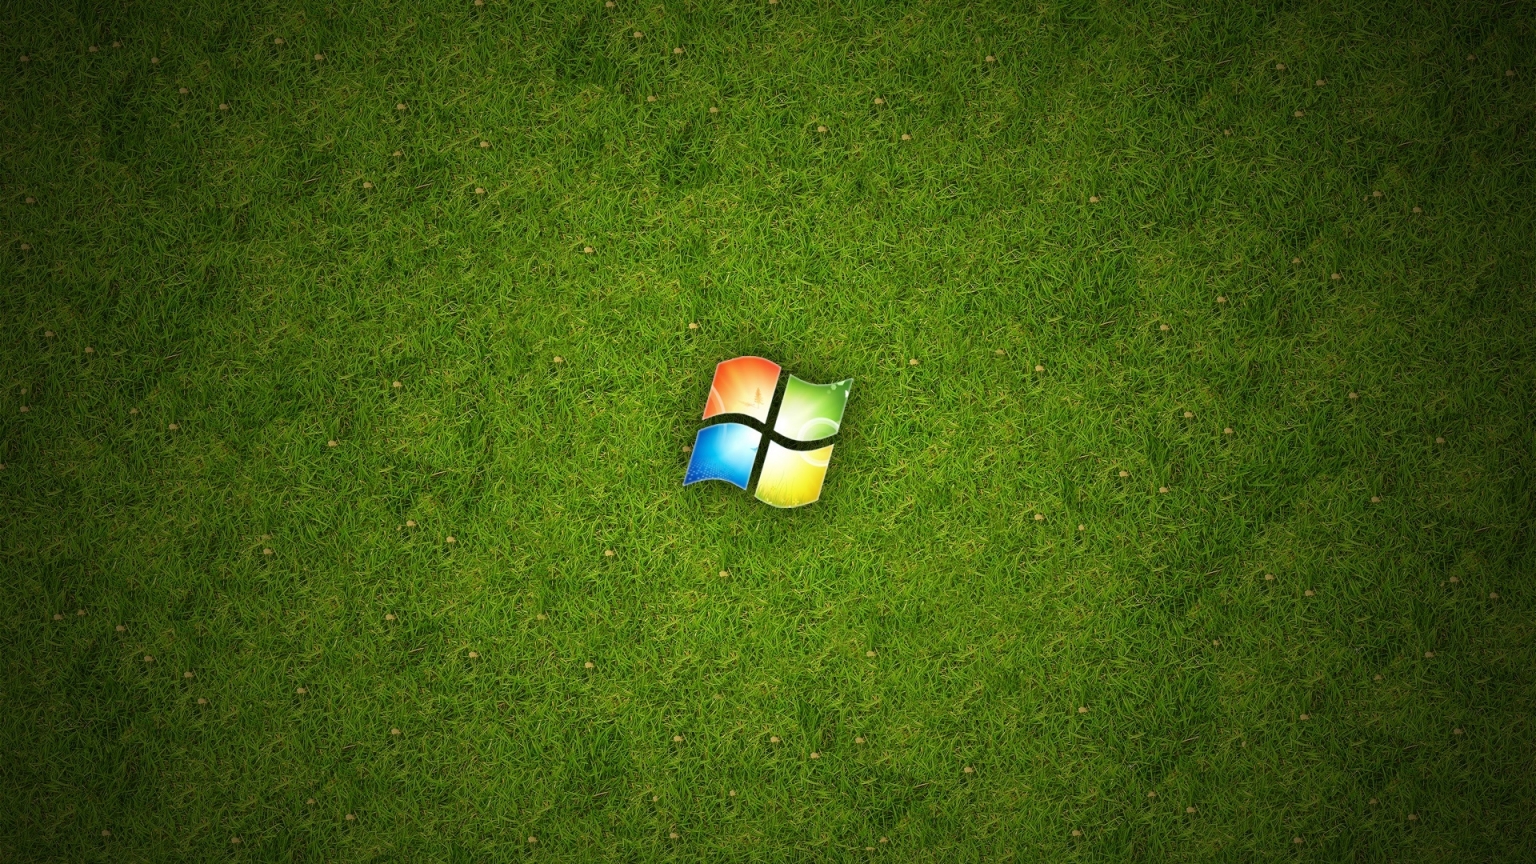 Windows Green for 1536 x 864 HDTV resolution